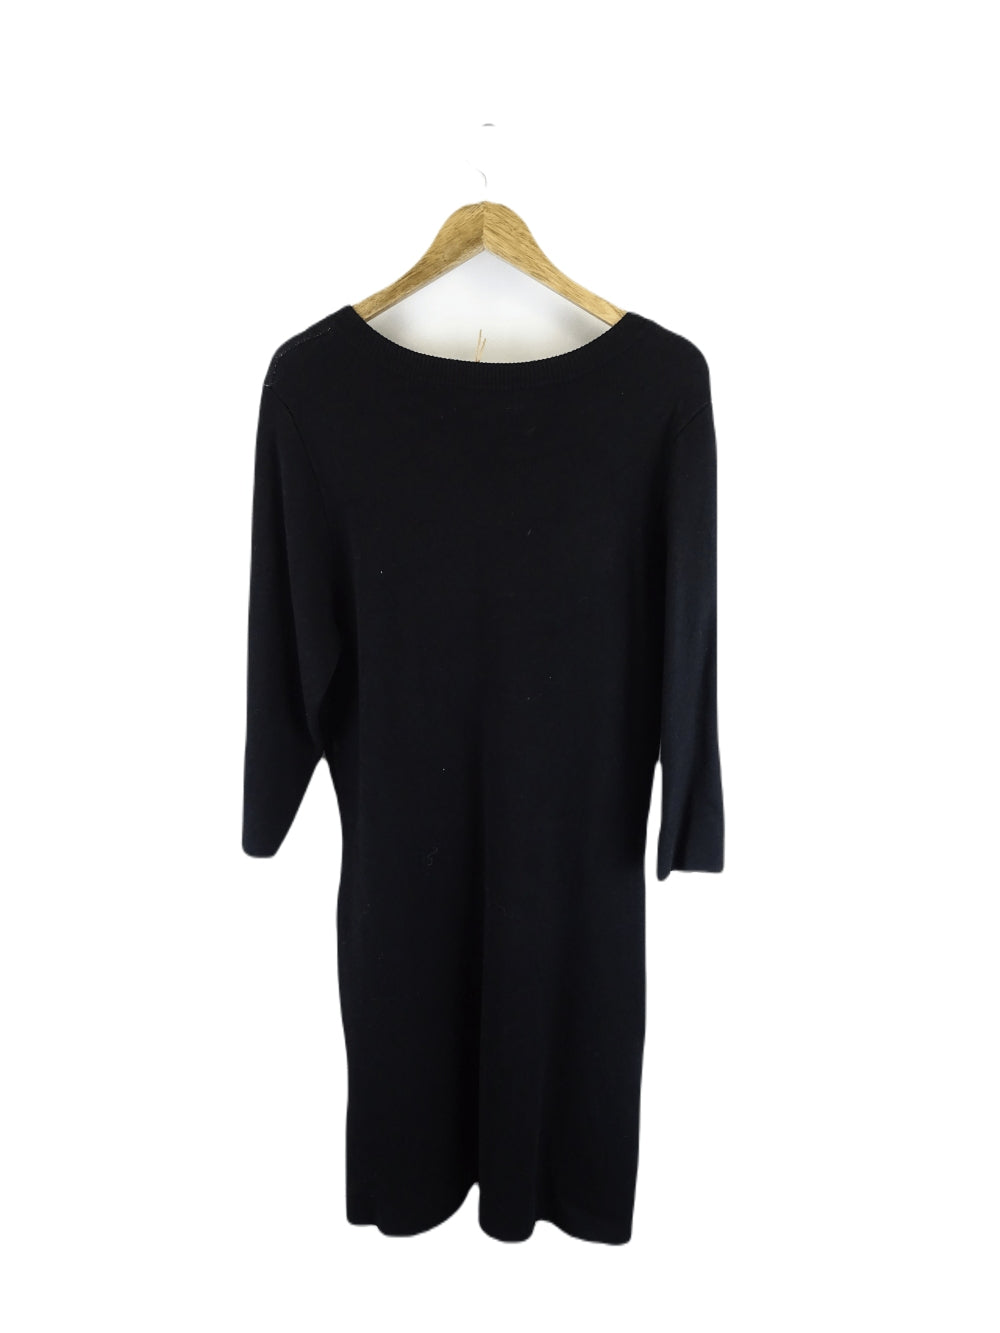 Phoebe Couture Animal Print Dress XL